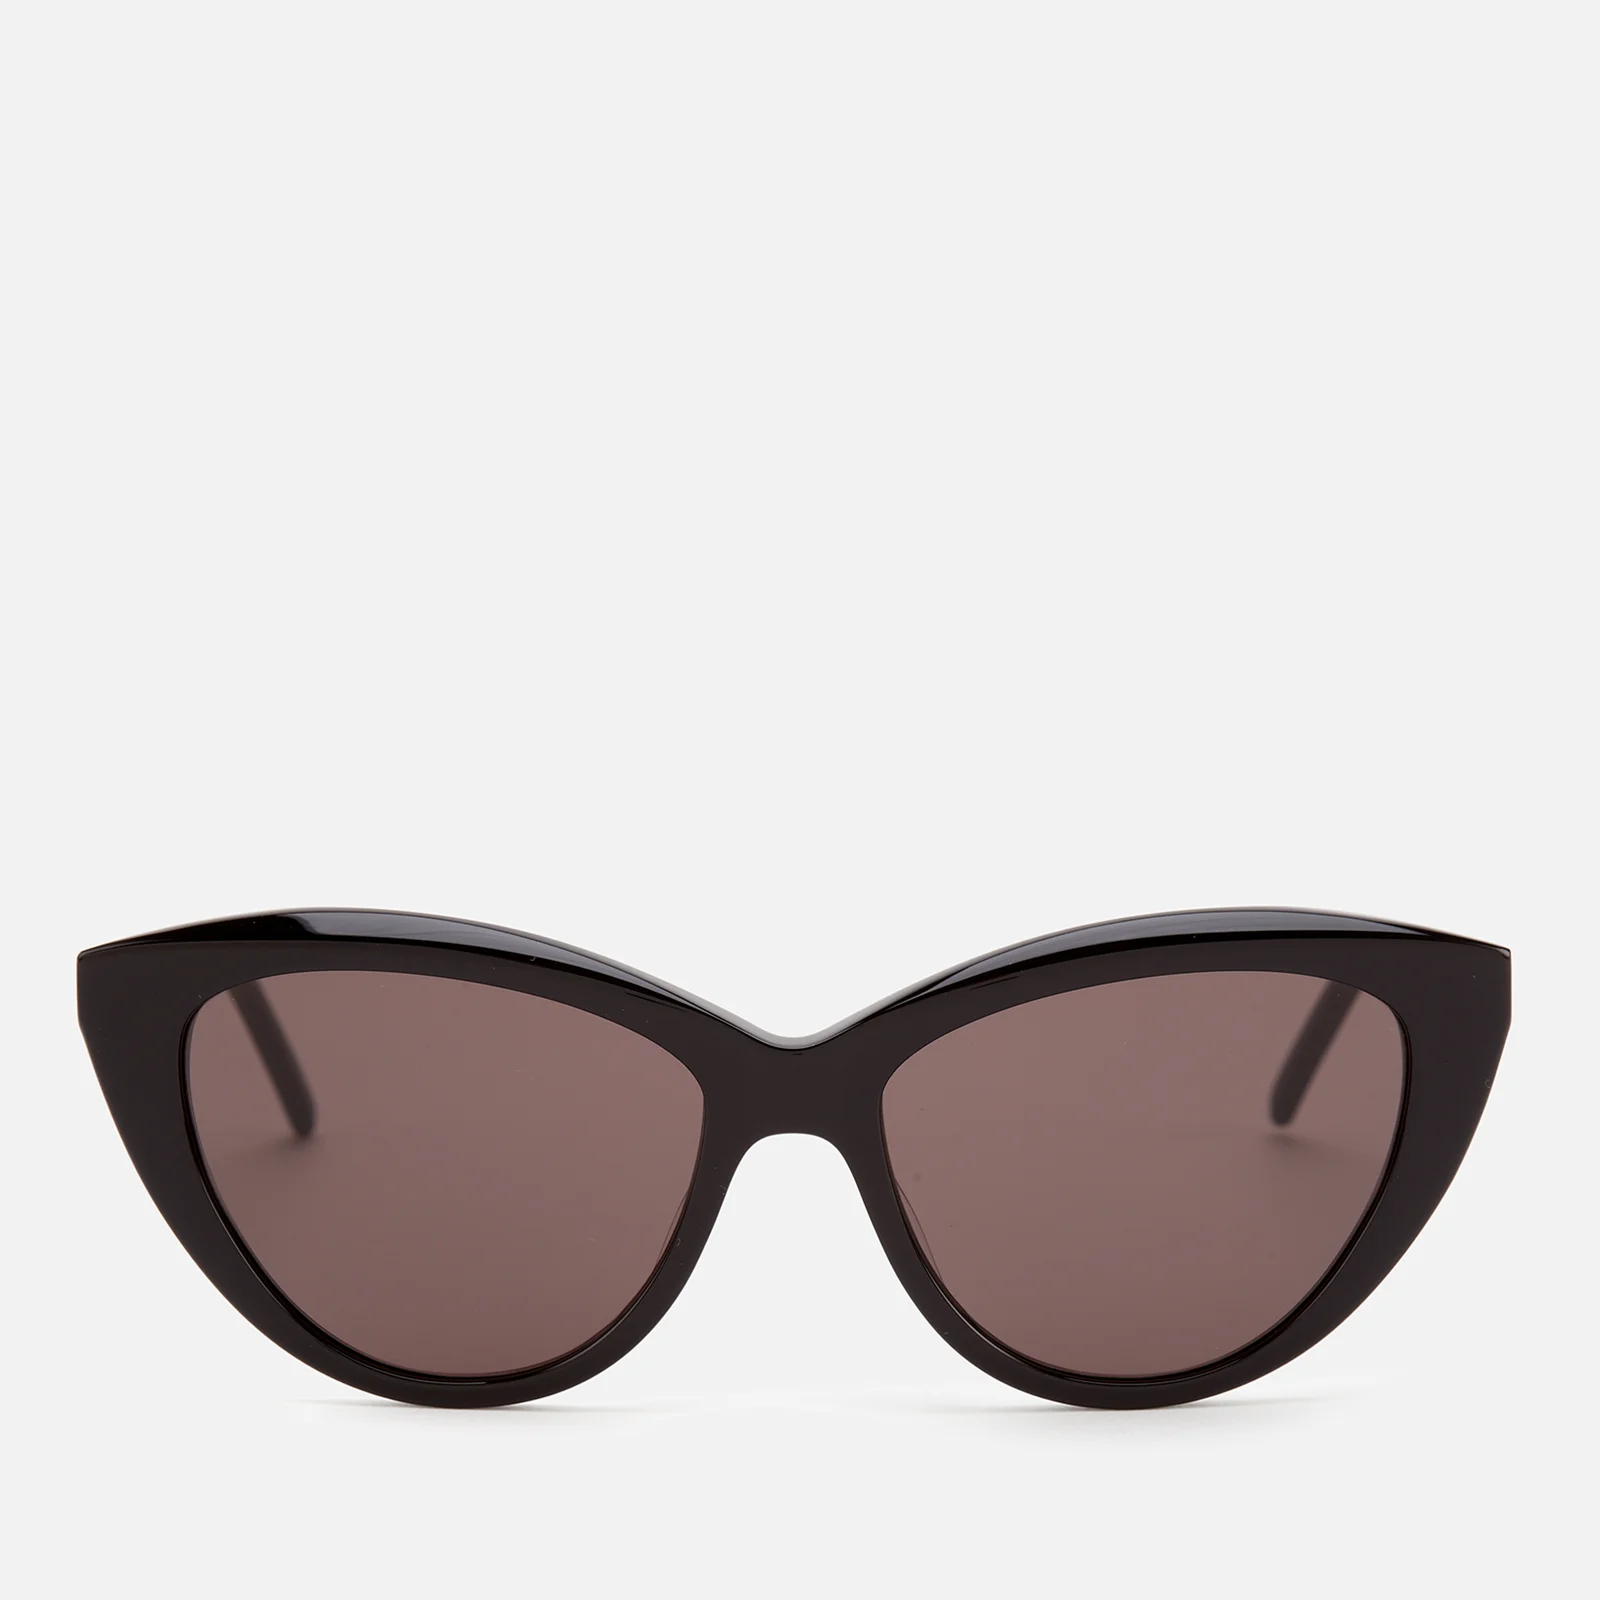 Saint Laurent Women's Sl M81 Cat Eye Sunglasses - Black/Silver Image 1